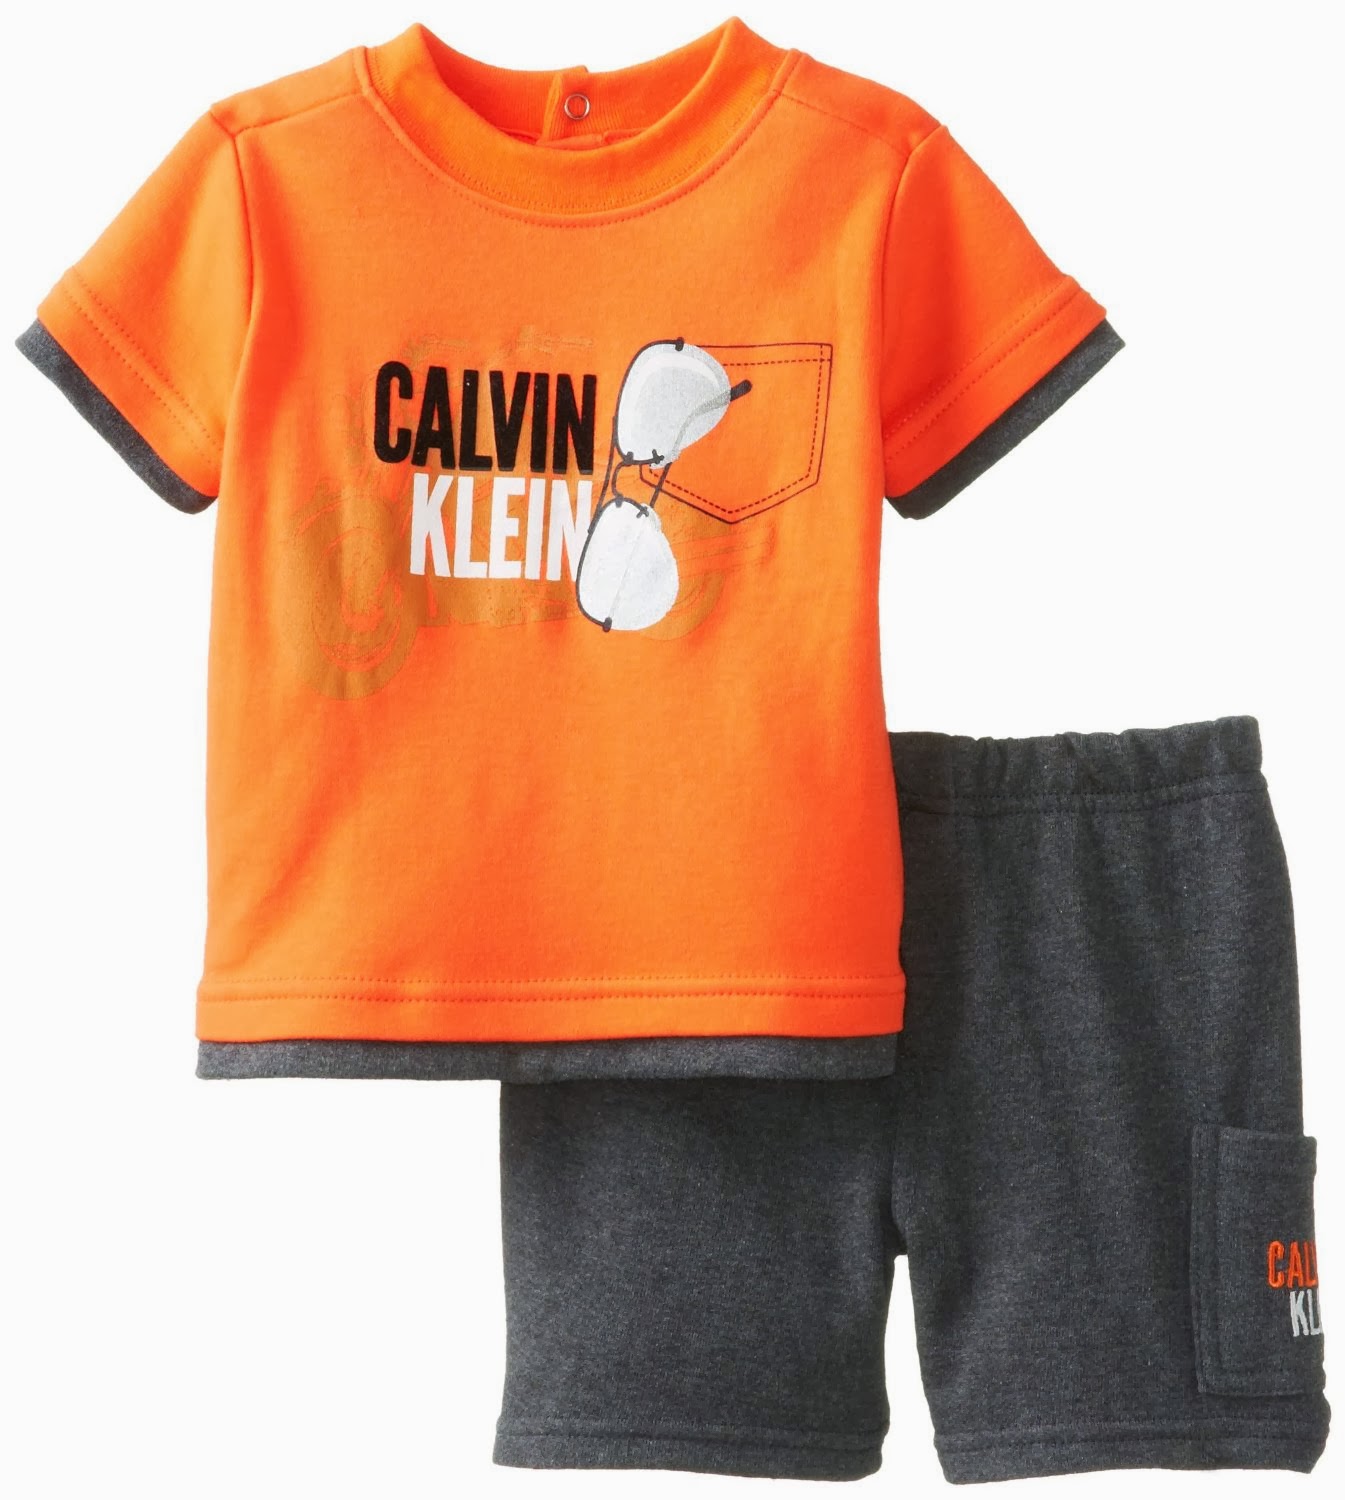 Rays Little  Baju  Bayi  Bermerek Calvin Klein Untuk Bayi  